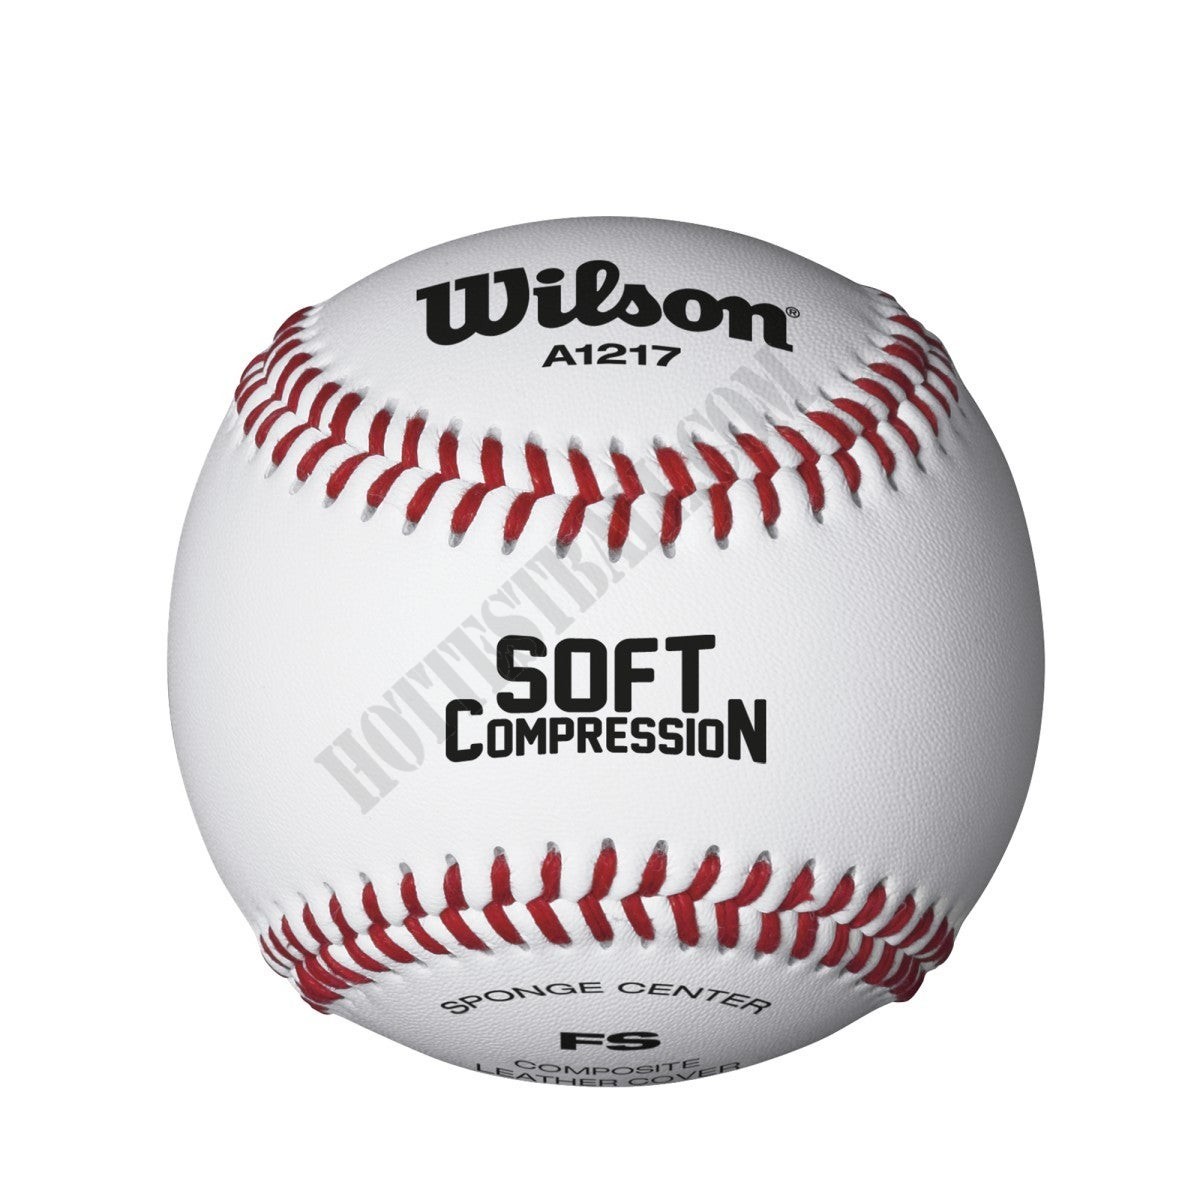 A1217 Soft Compression Baseballs - Wilson Discount Store - A1217 Soft Compression Baseballs - Wilson Discount Store